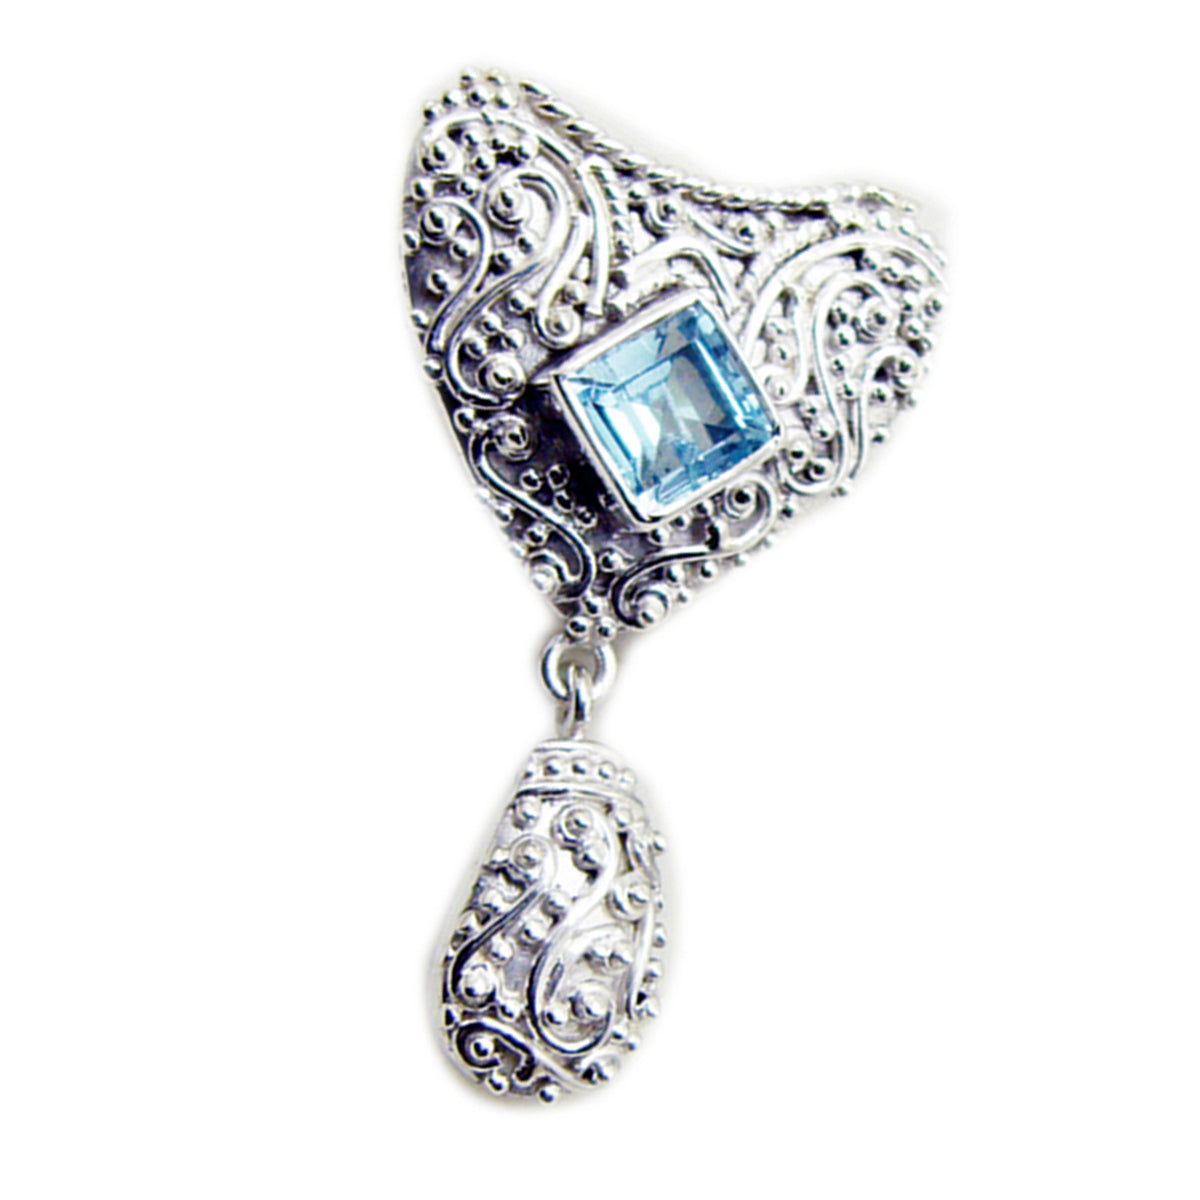 Riyo deslumbrante piedra preciosa cuadrada facetada azul topacio azul colgante de plata de ley regalo para hecho a mano